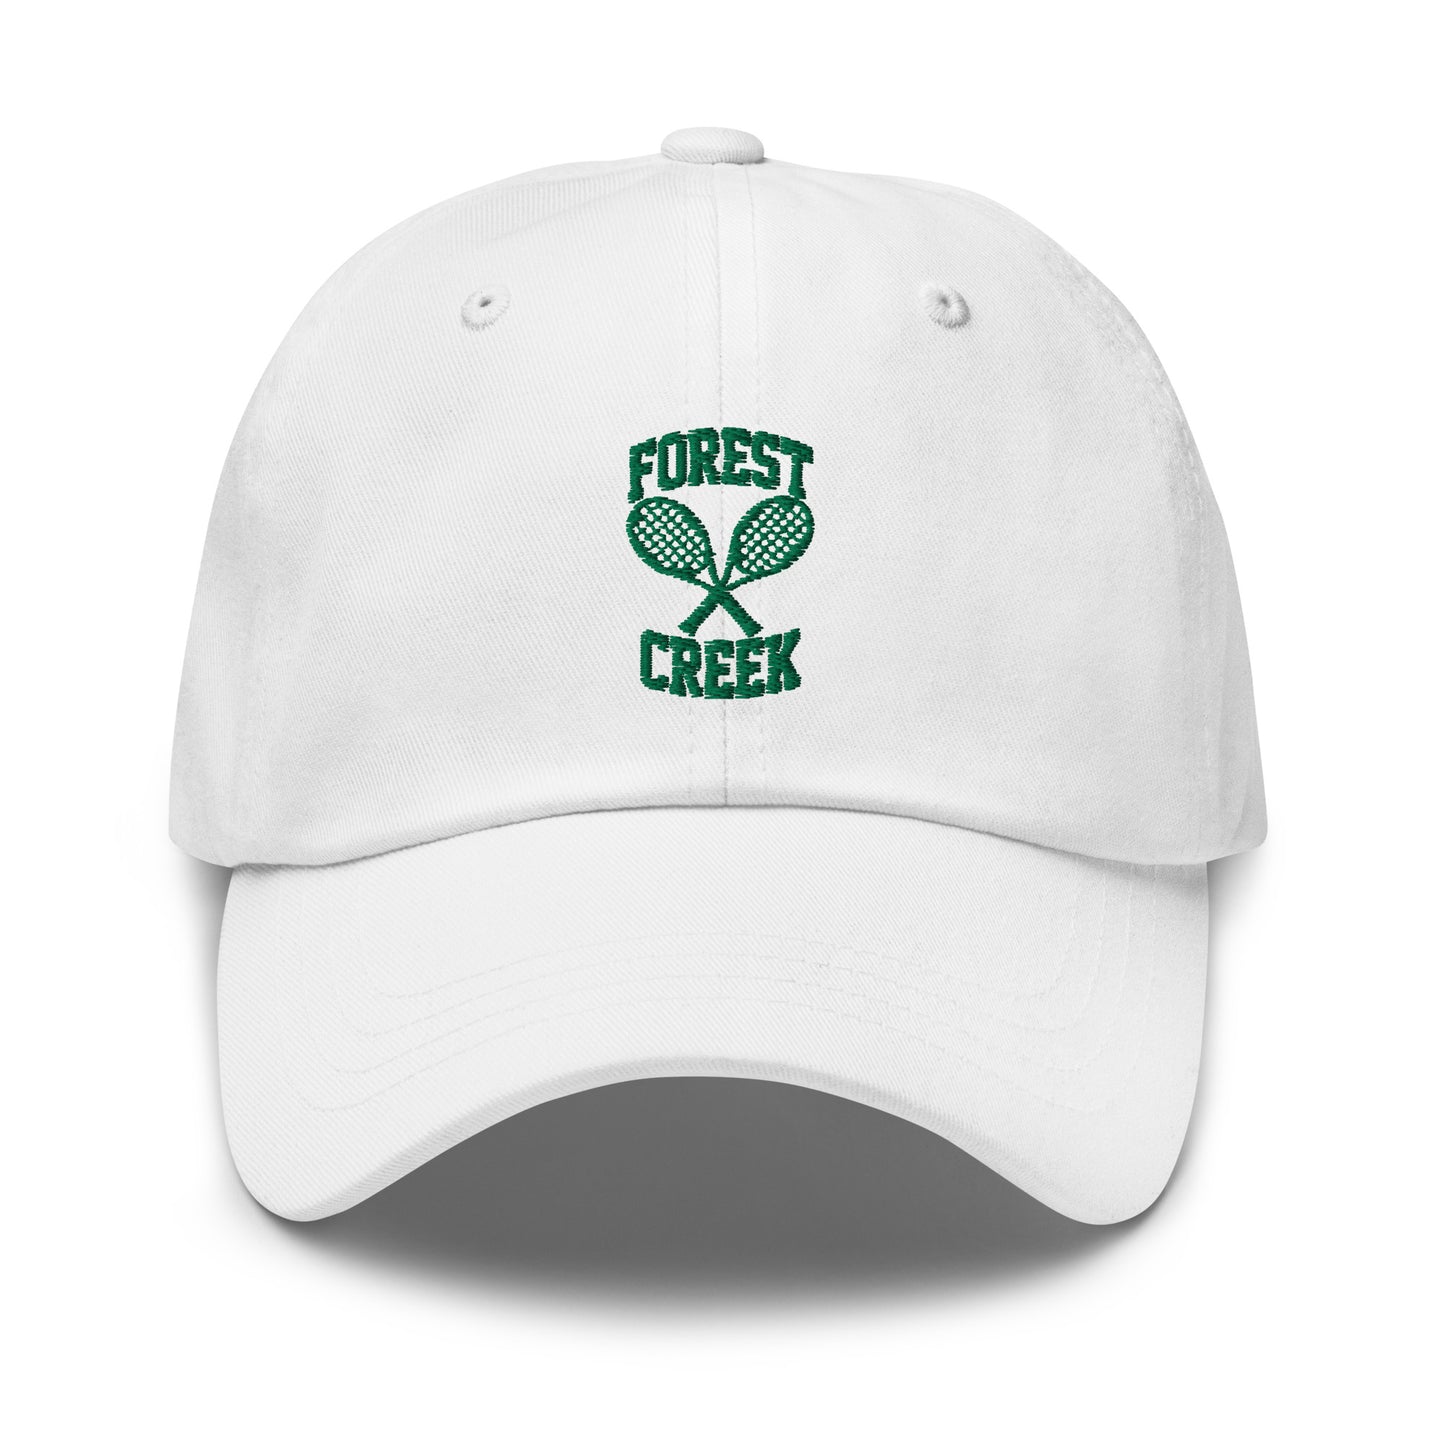 Forest Creek tennis team adjustable hat